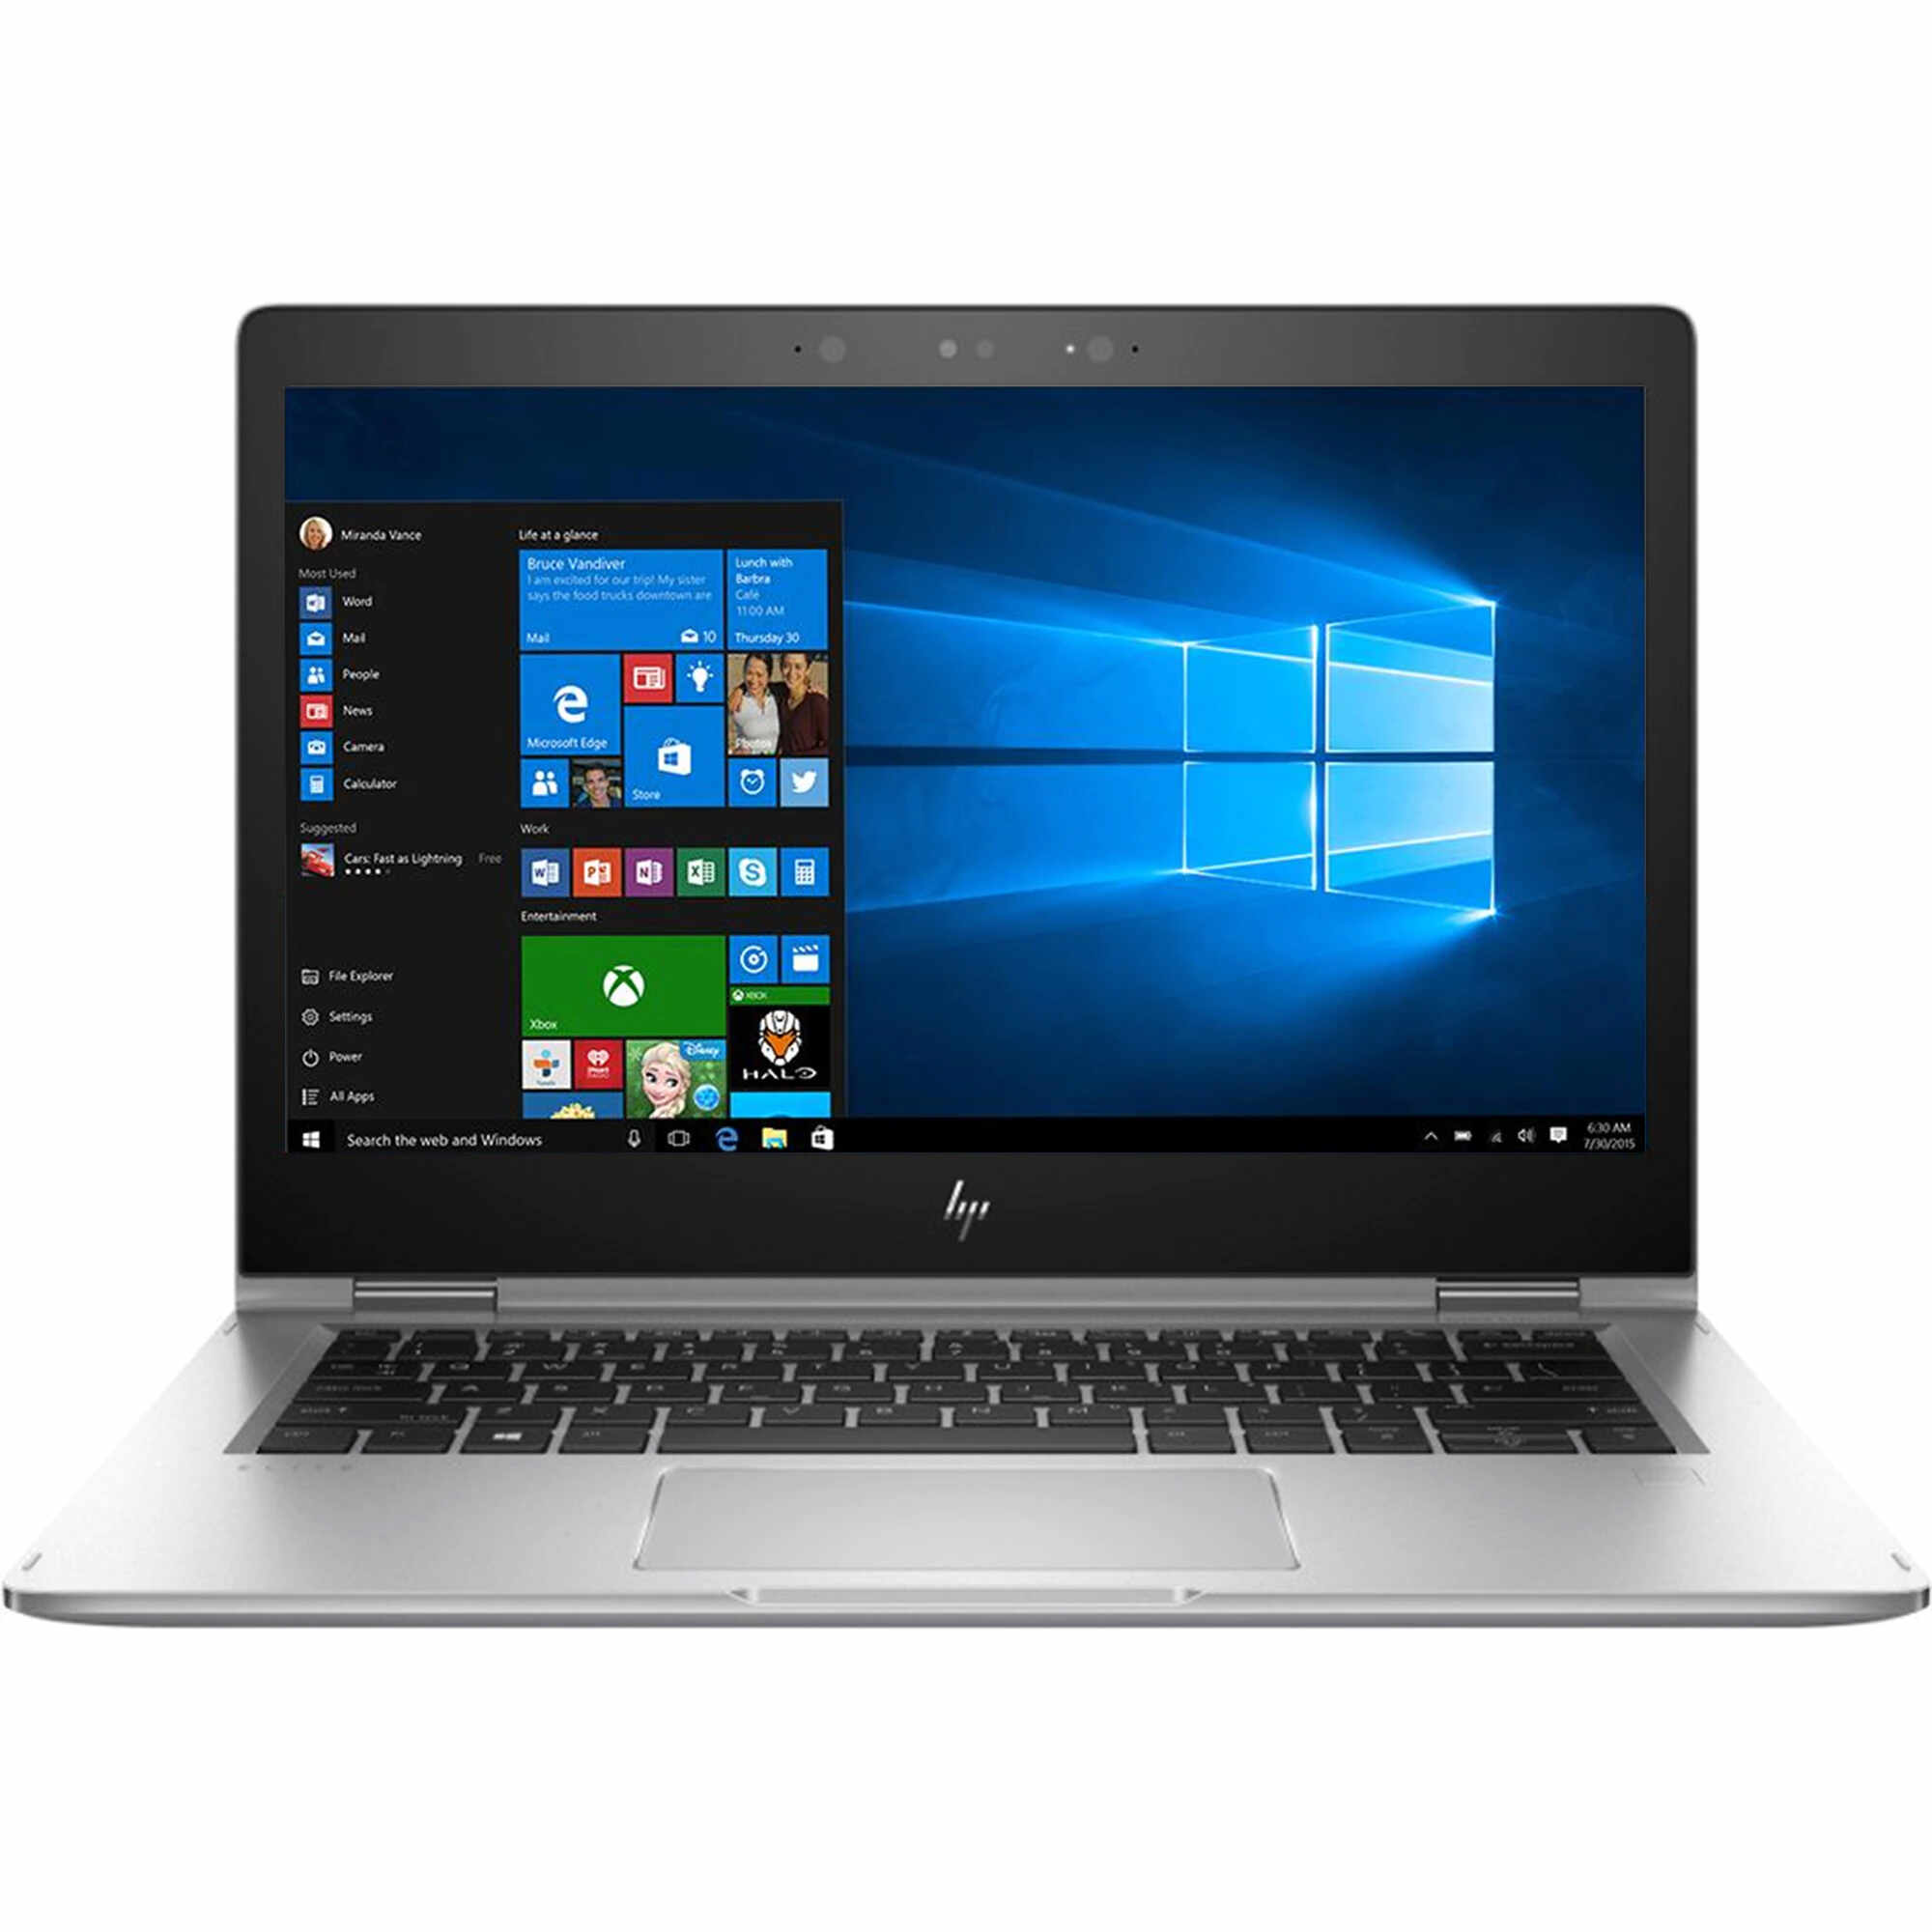 Laptop HP EliteBook X360 1030 G2, Intel Core i5-7200U 2.50GHz, 8GB DDR4, 240GB SSD, 13.3 Inch Full HD TouchScreen, Webcam